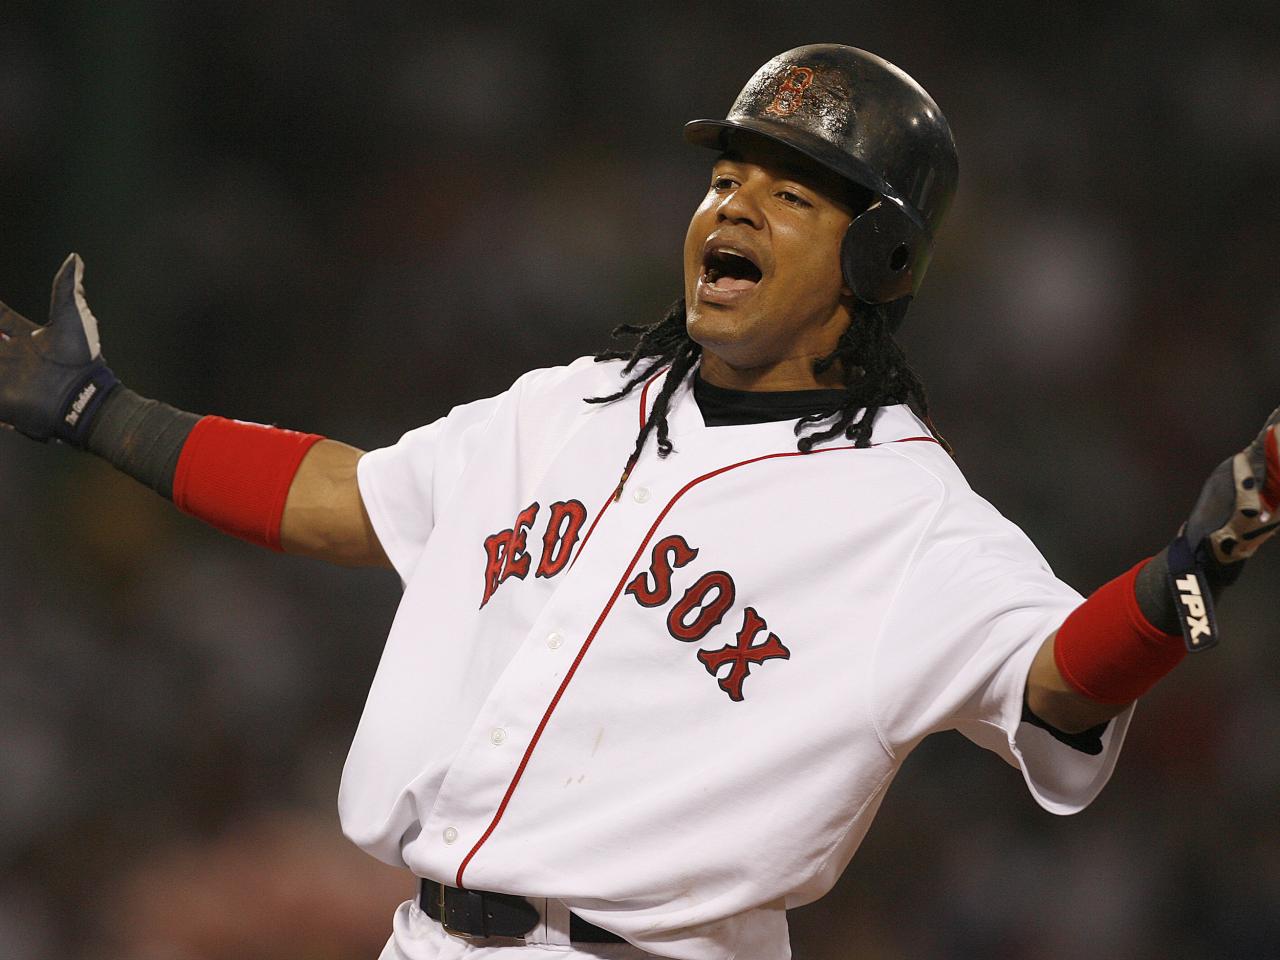 At 48, Manny Ramirez eyes a baseball comeback – in Taiwan - The Boston Globe